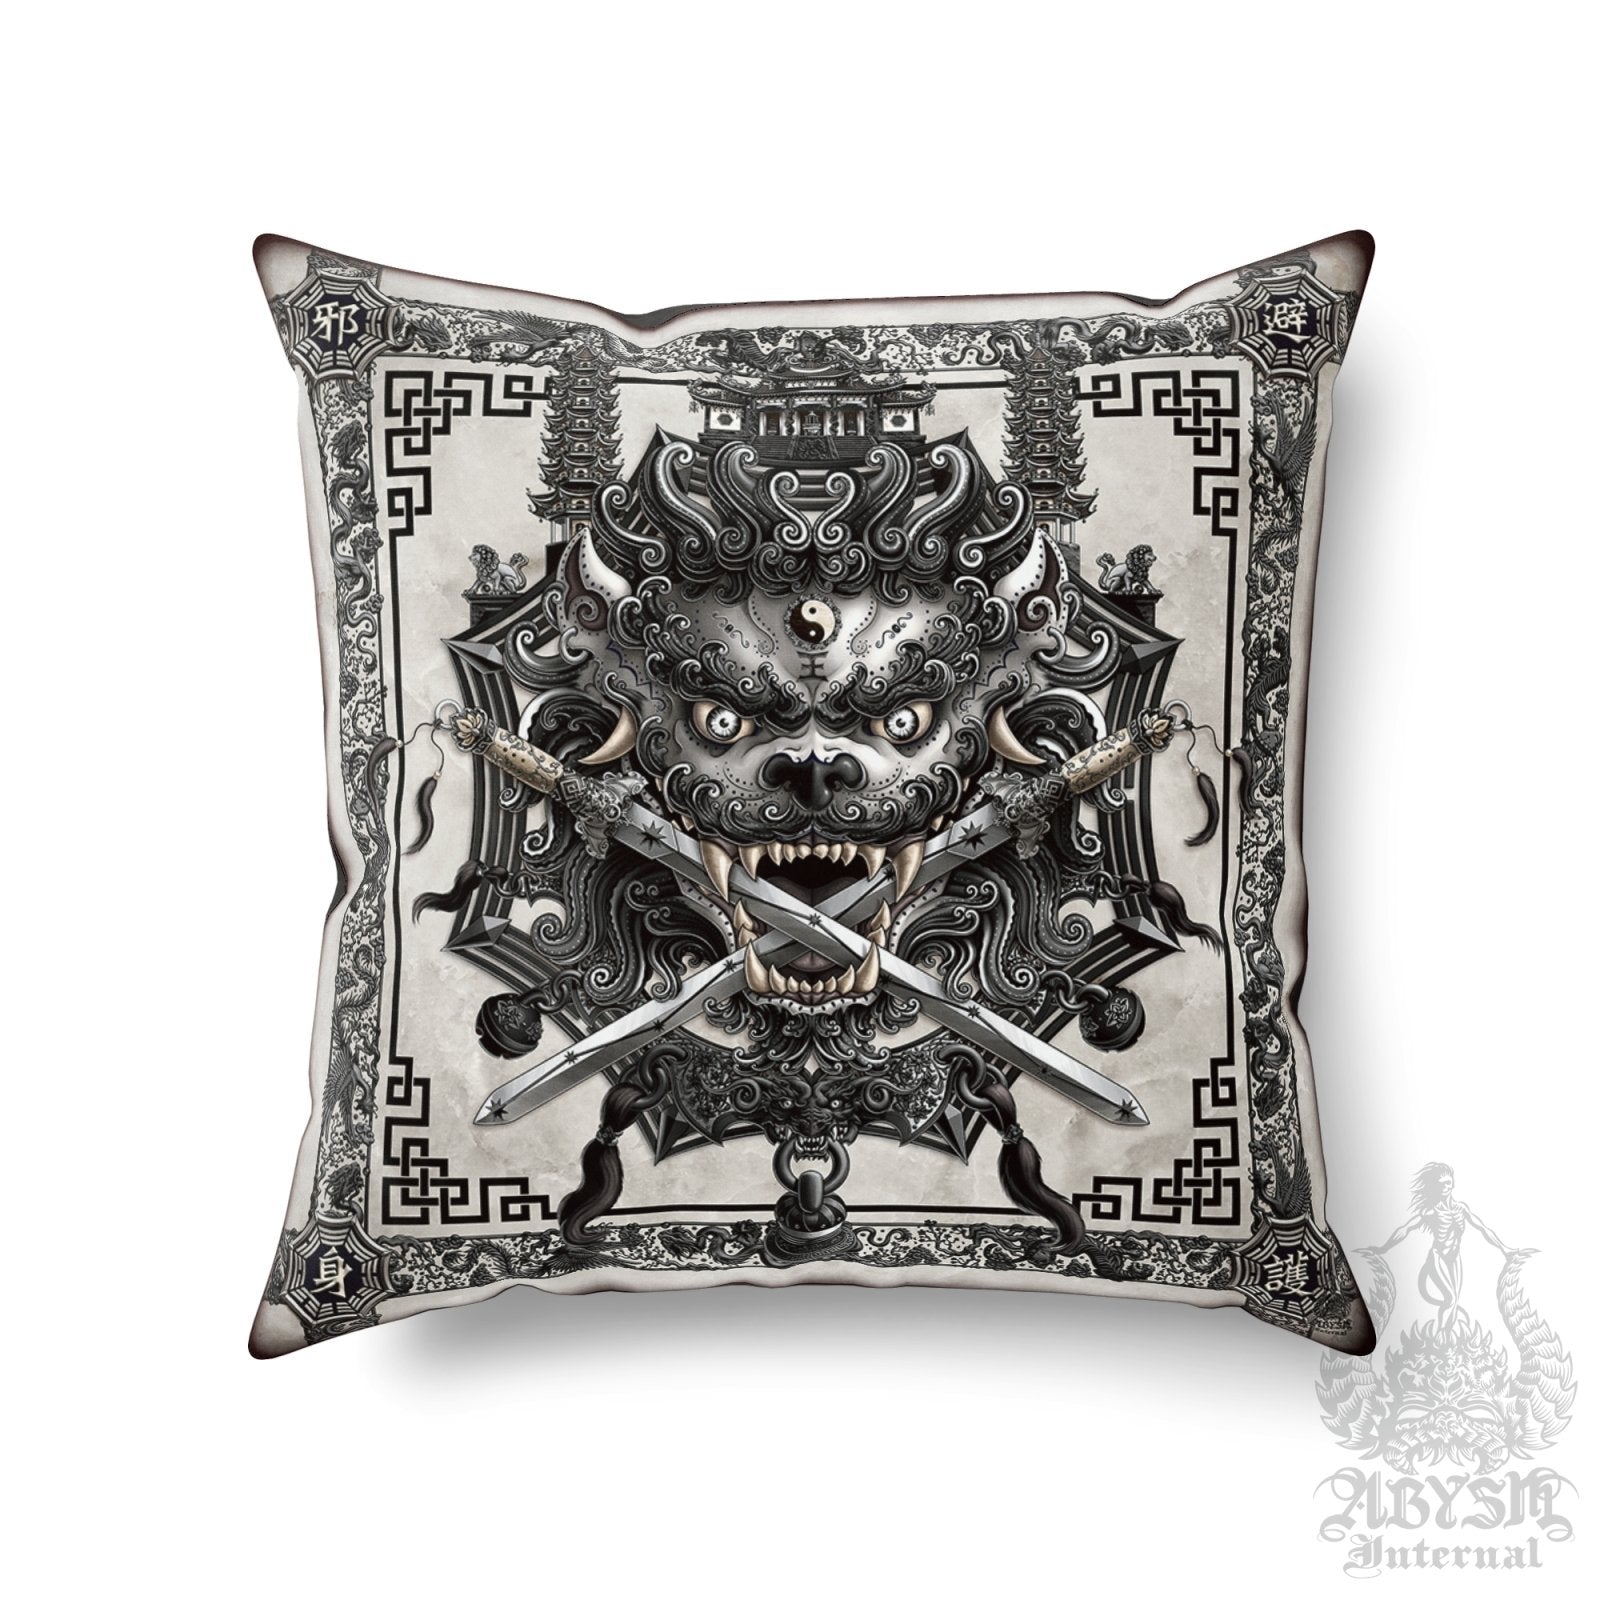 Asian Lion Throw Pillow, Decorative Accent Cushion, Taiwan Sword Lion, Chinese Art, Game Room Decor, Alternative Home - Black & White Goth - Abysm Internal